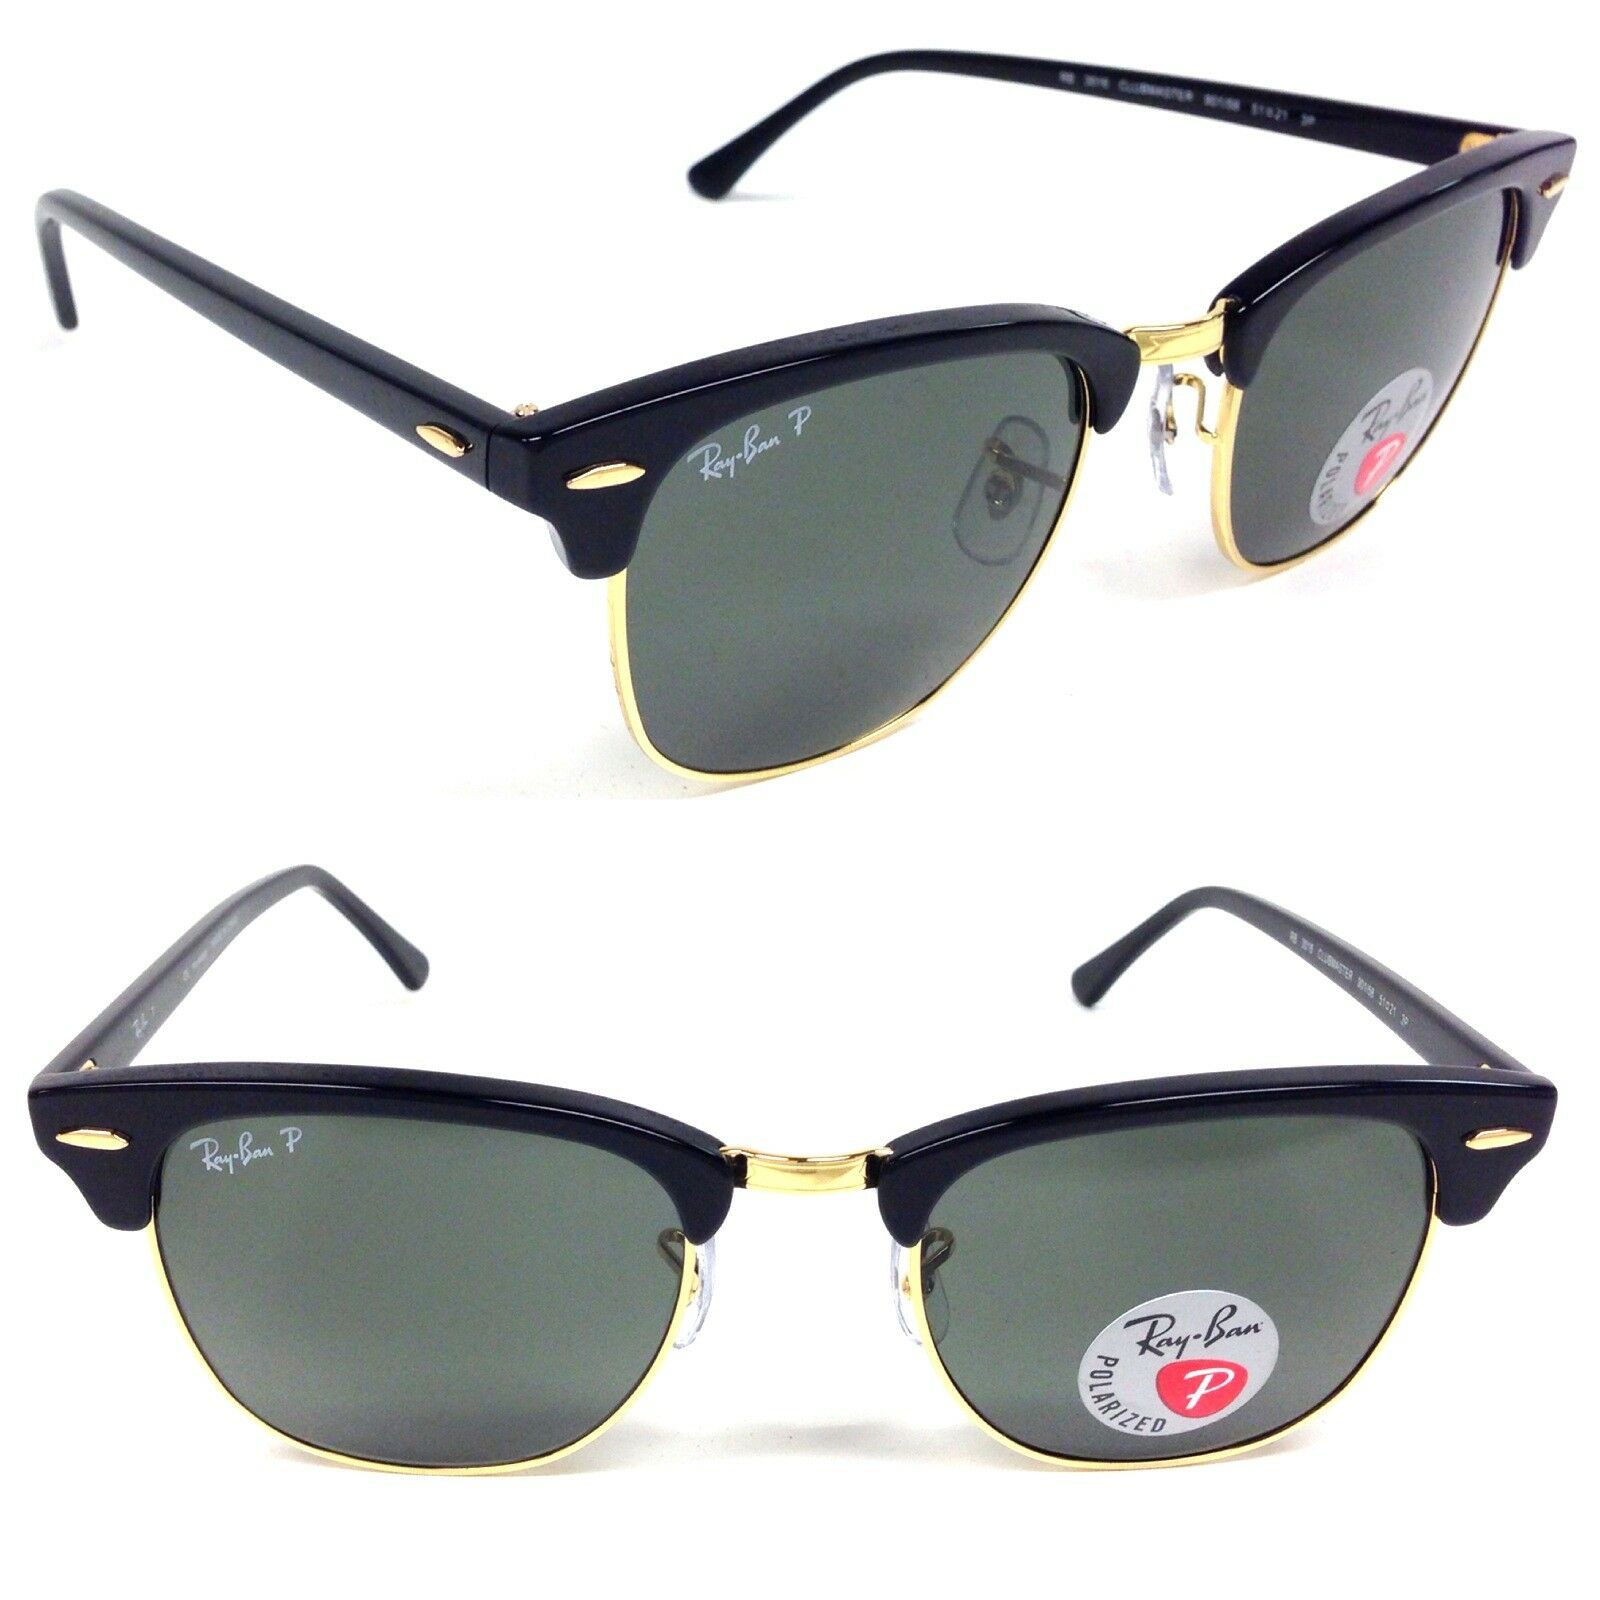 Rayban Clubmaster Classic Polarized Sunglasses Black Green Classic 5 Sunglass Pass